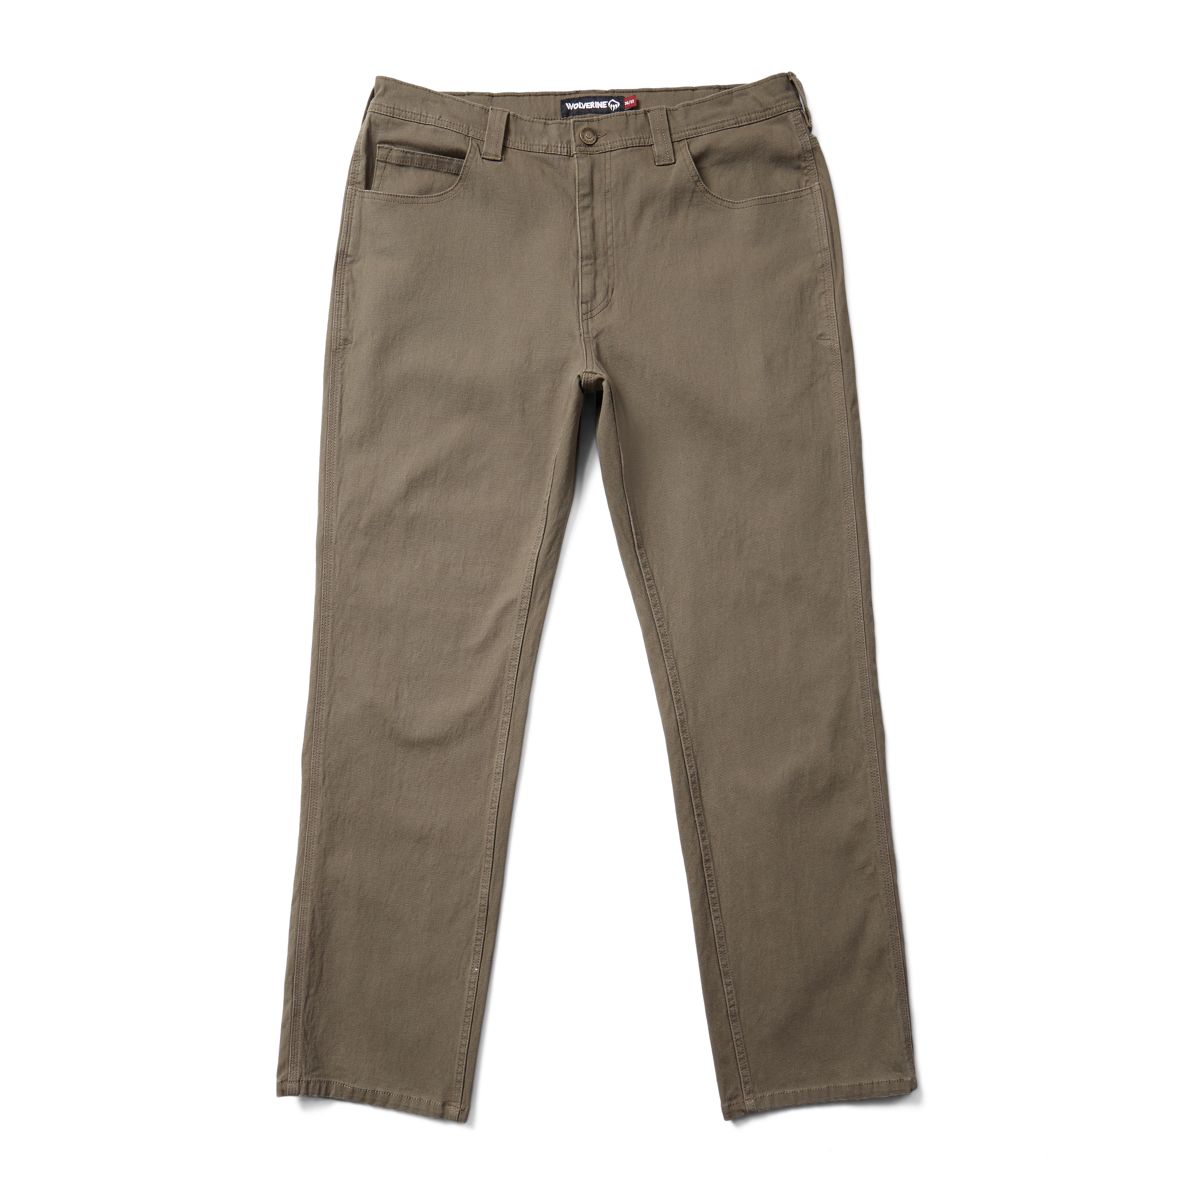 Work Pants & Shorts for Men